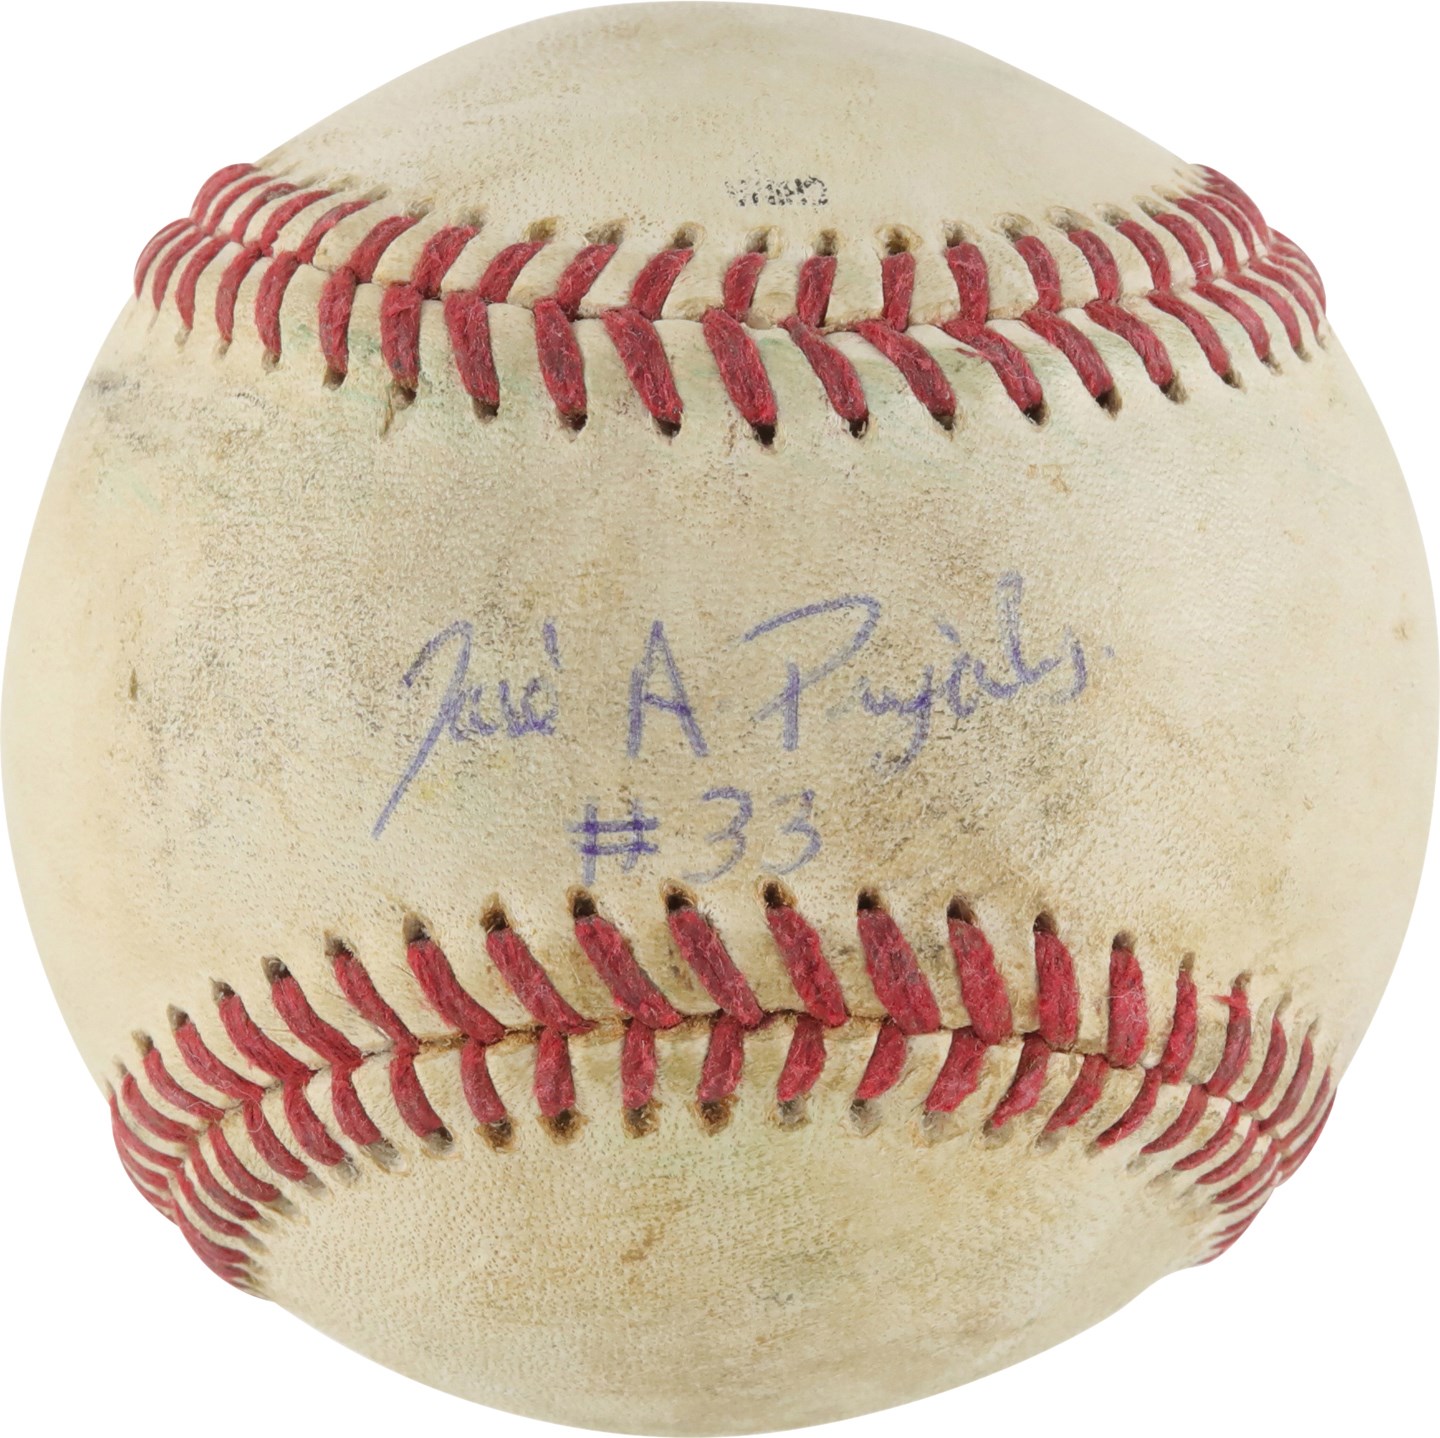 Baseball Autographs - 1999 Earliest Known Albert Pujols Single-Signed Ball - Rare Full Name Signature! (JSA)